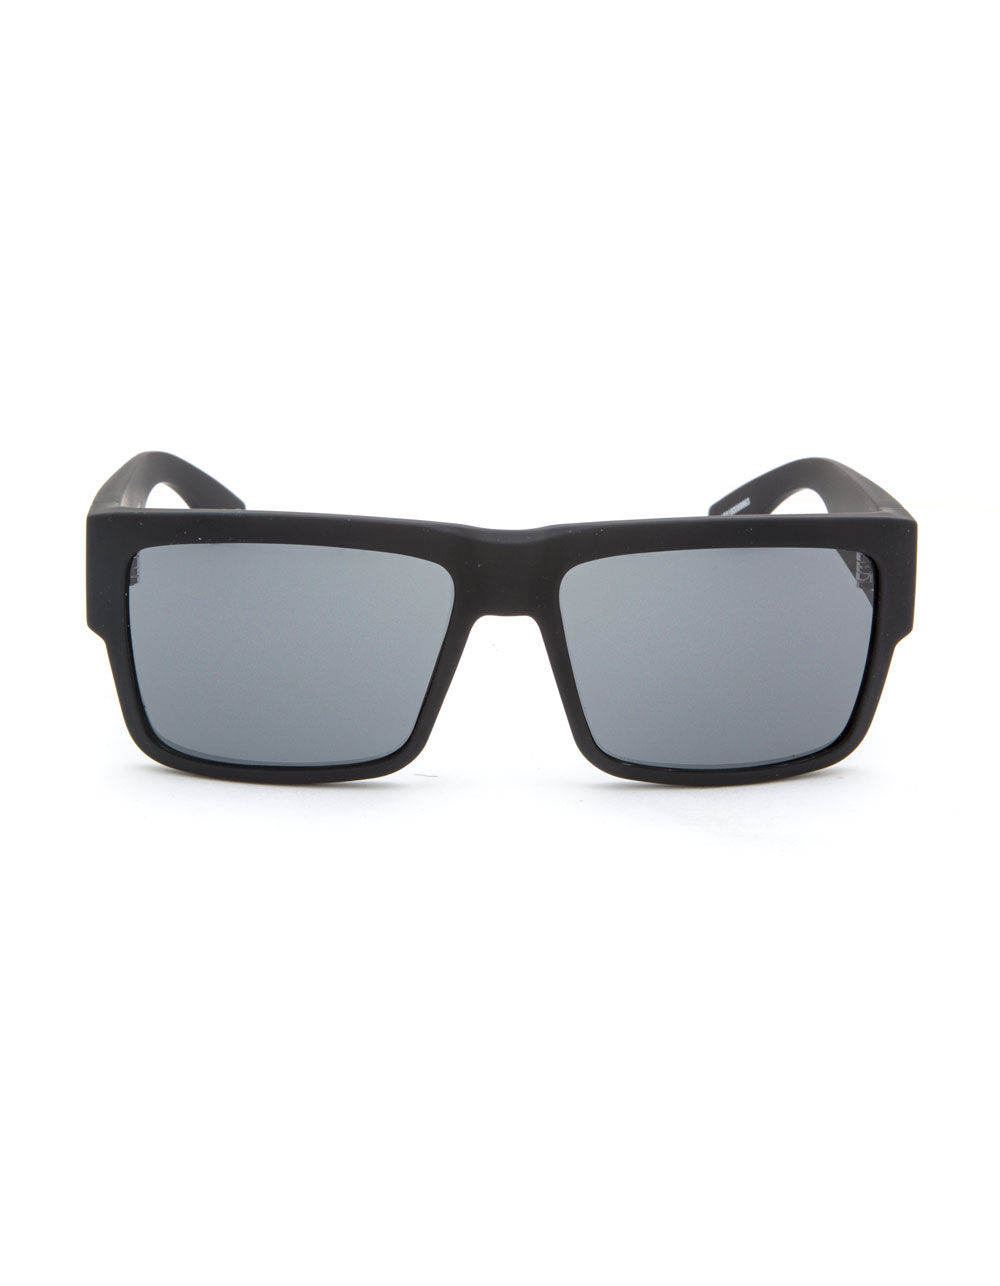 SPY Cyrus Matte Black Flag Sunglasses image number 1